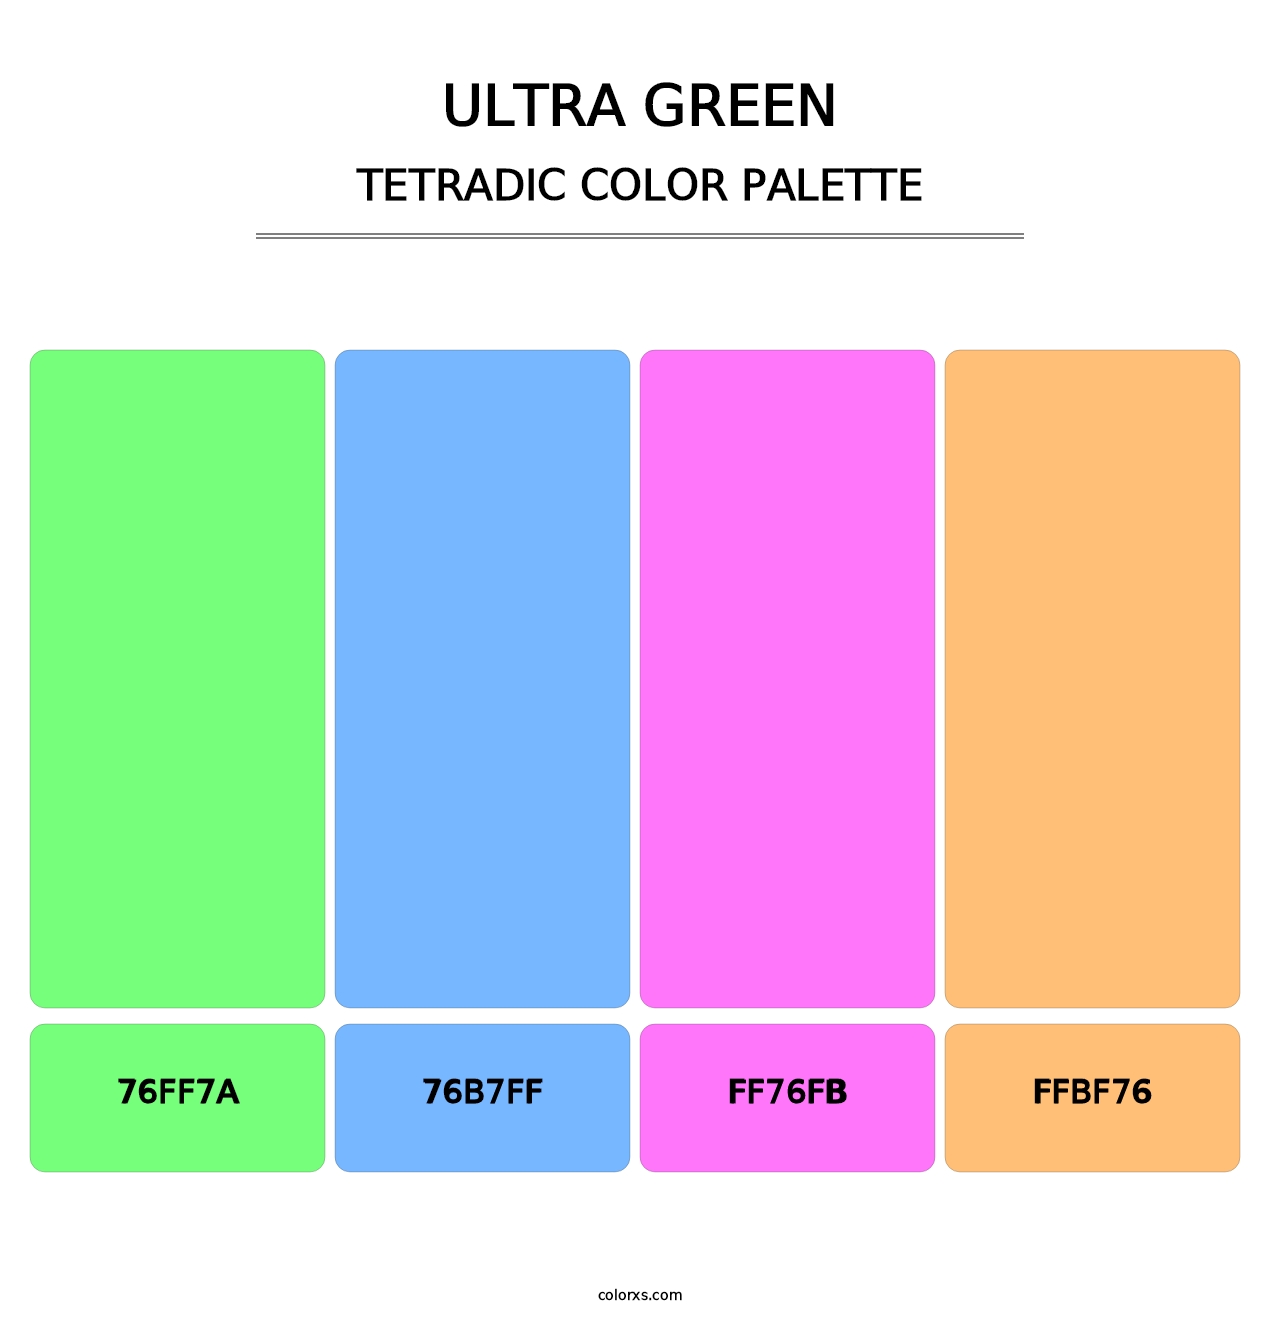 Ultra Green - Tetradic Color Palette